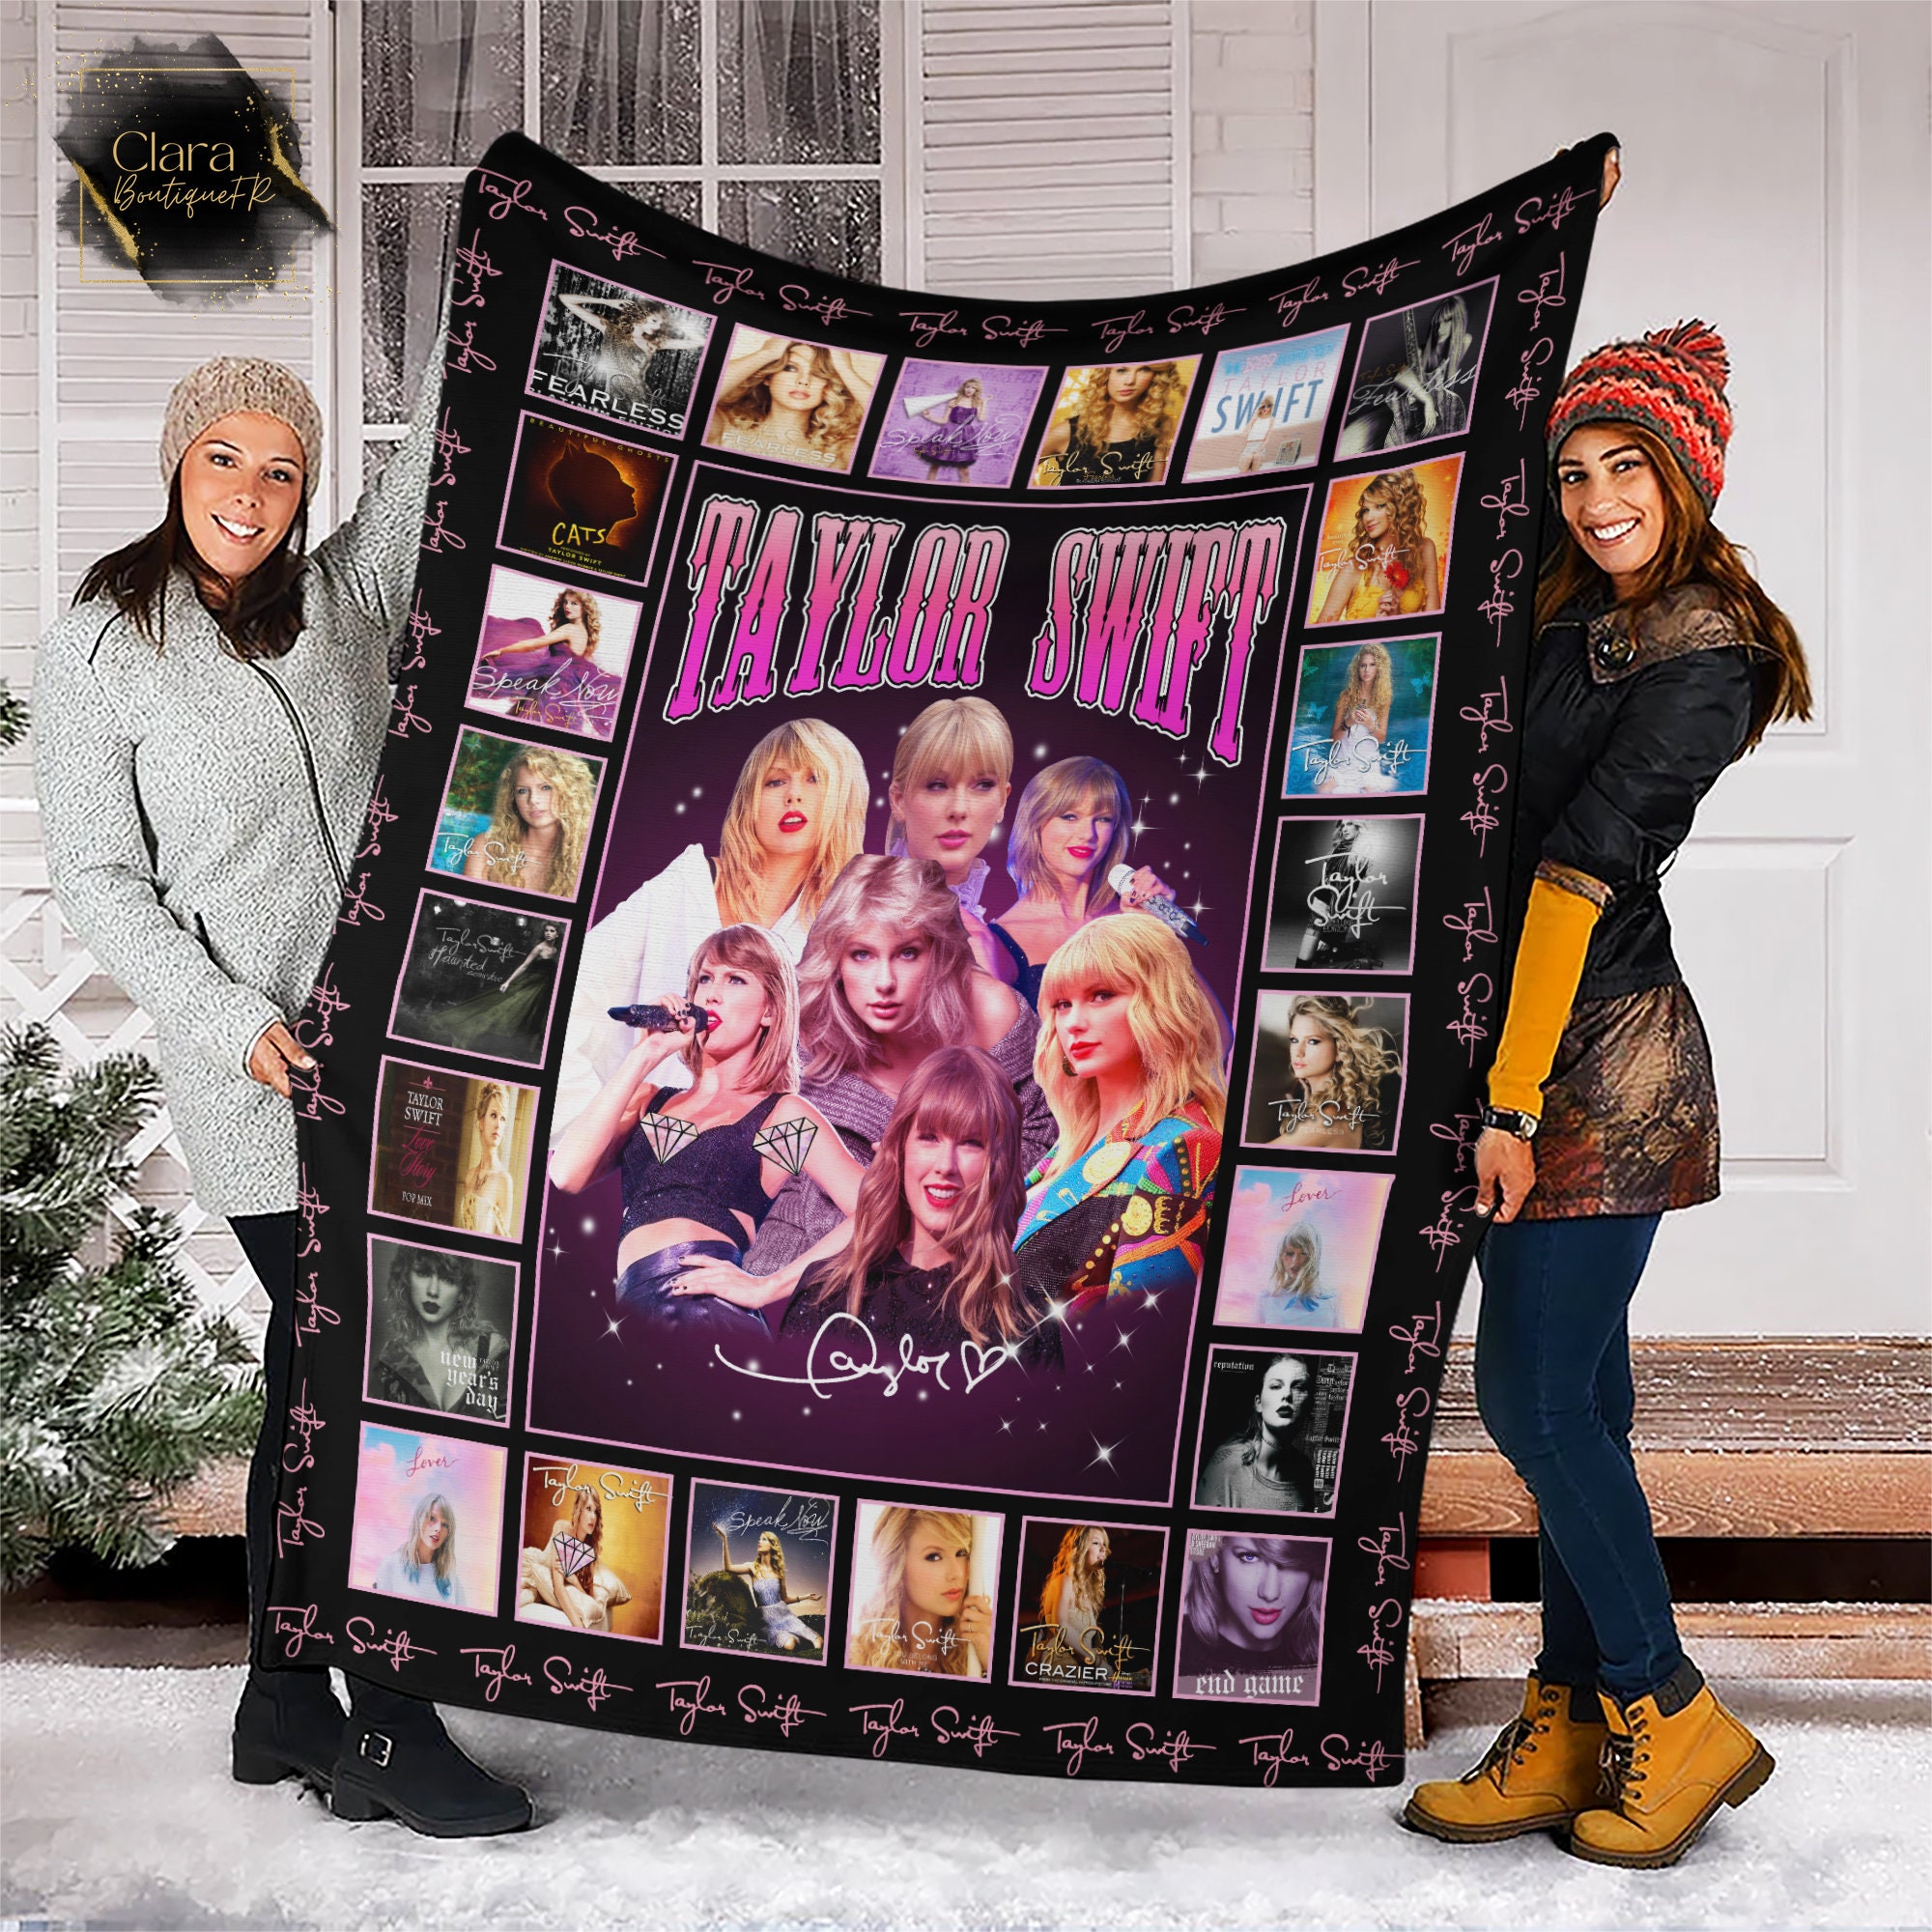 Discover Taylor Inspired Fleece Blanket